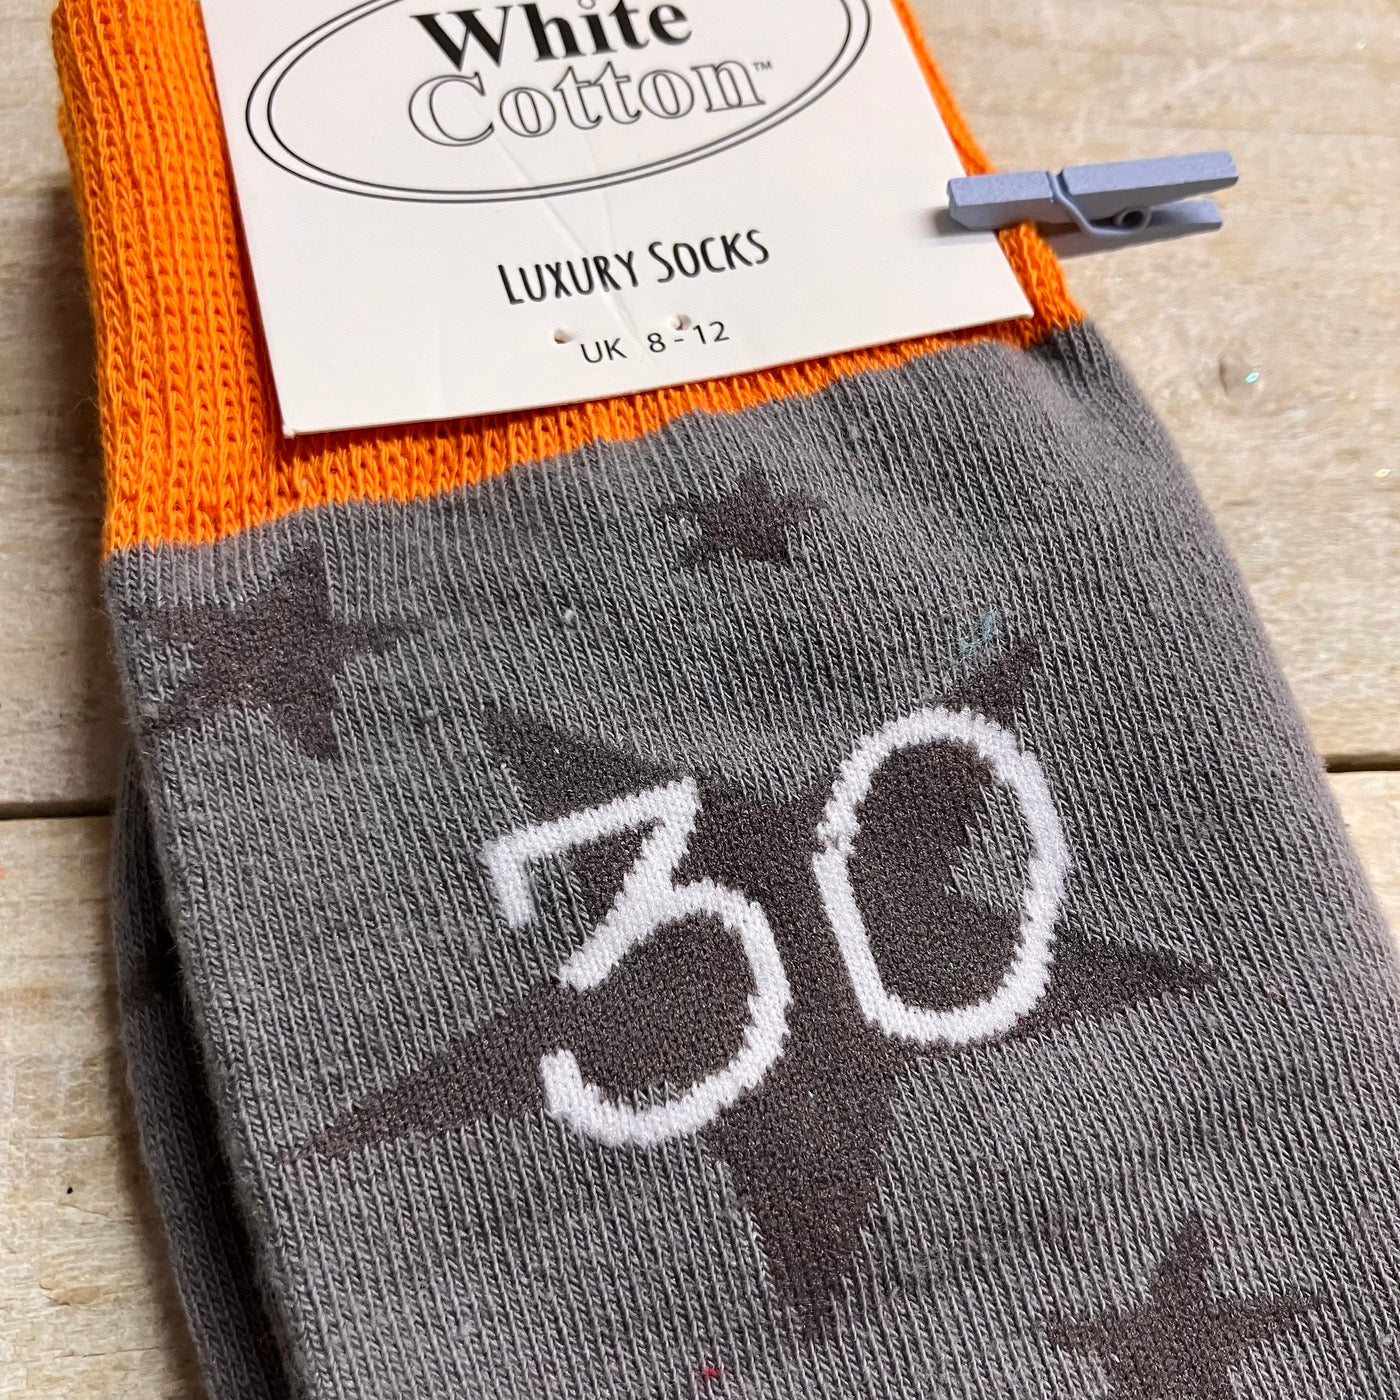 White Cotton Mens Ankle Socks - Grey Star - 30th